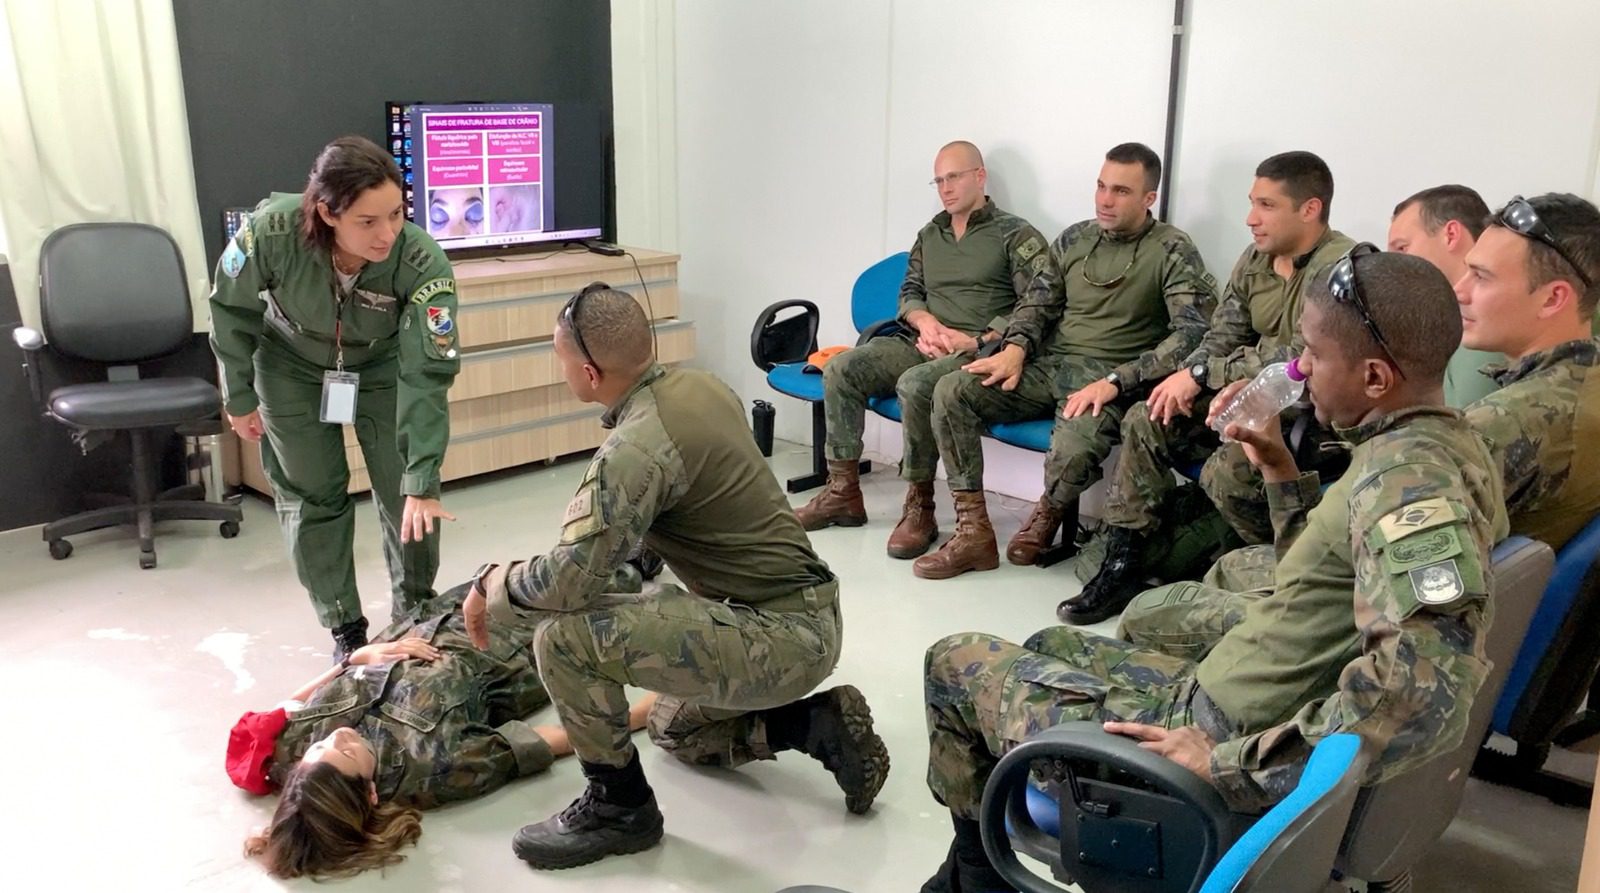 Tactical Pre-Hospital Care: saving lives in war scenarios